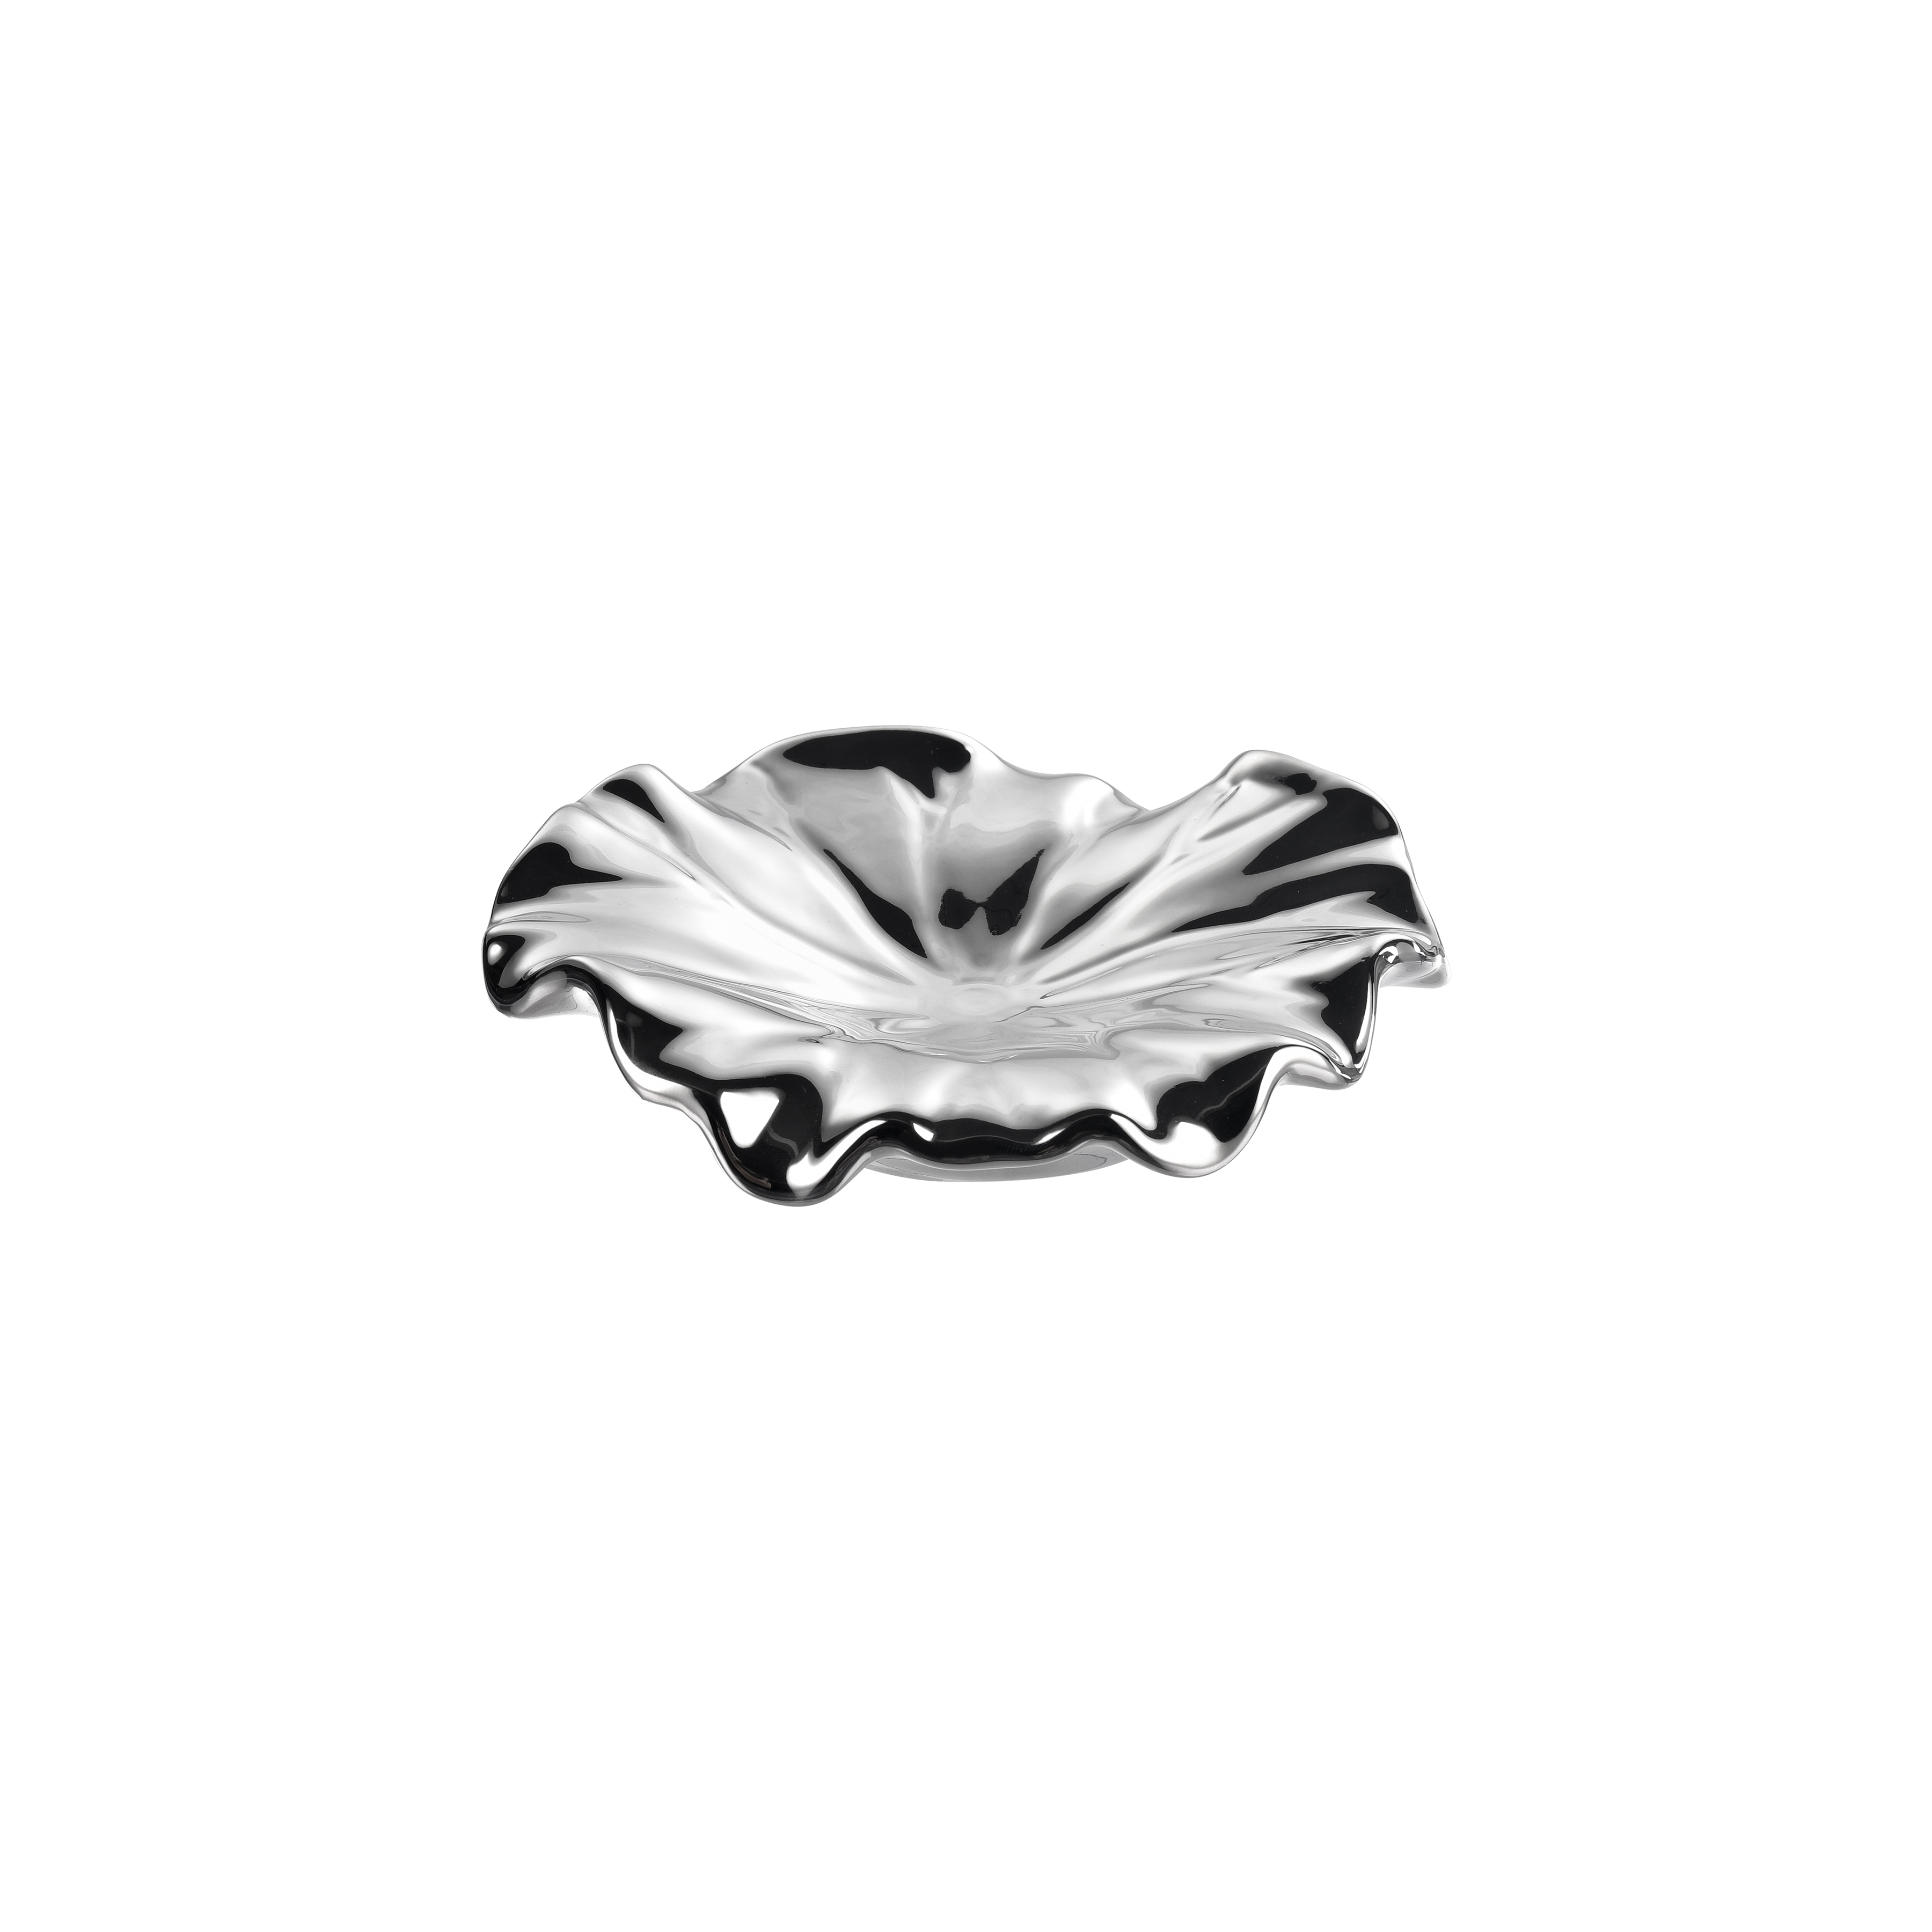 Petal Bowl - Set of 4 Silver - Image 4